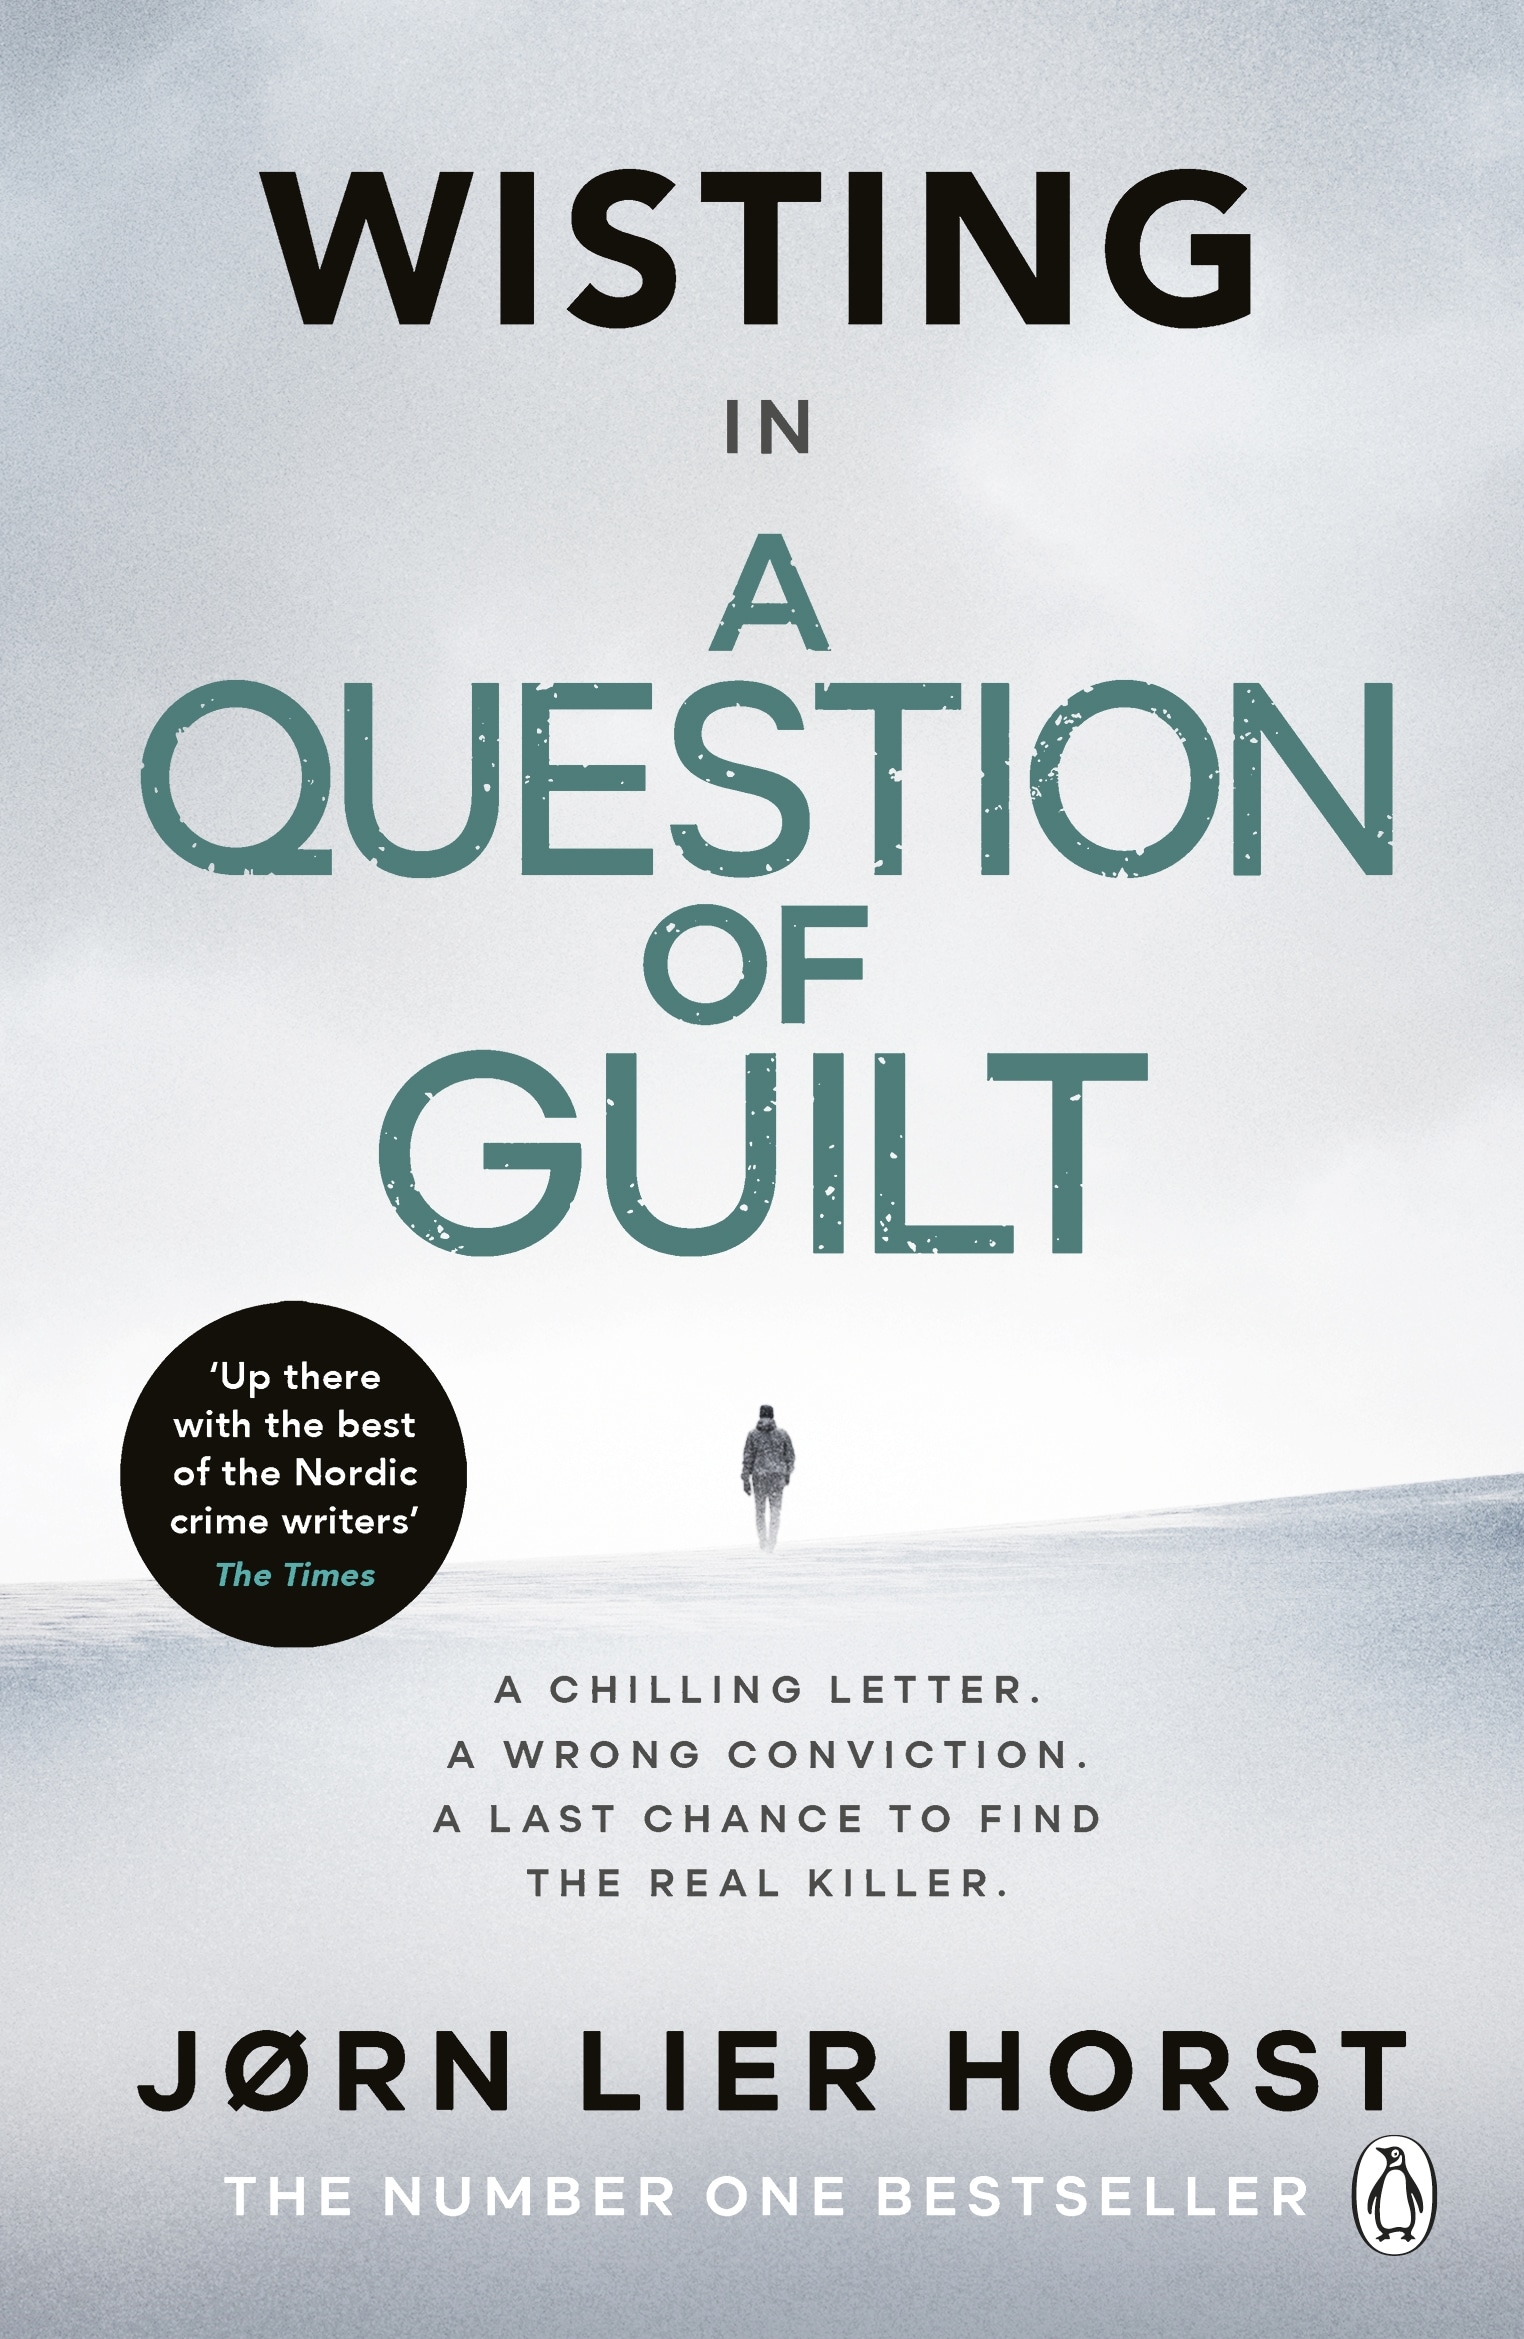 Book “A Question of Guilt” by Jørn Lier Horst — March 3, 2022